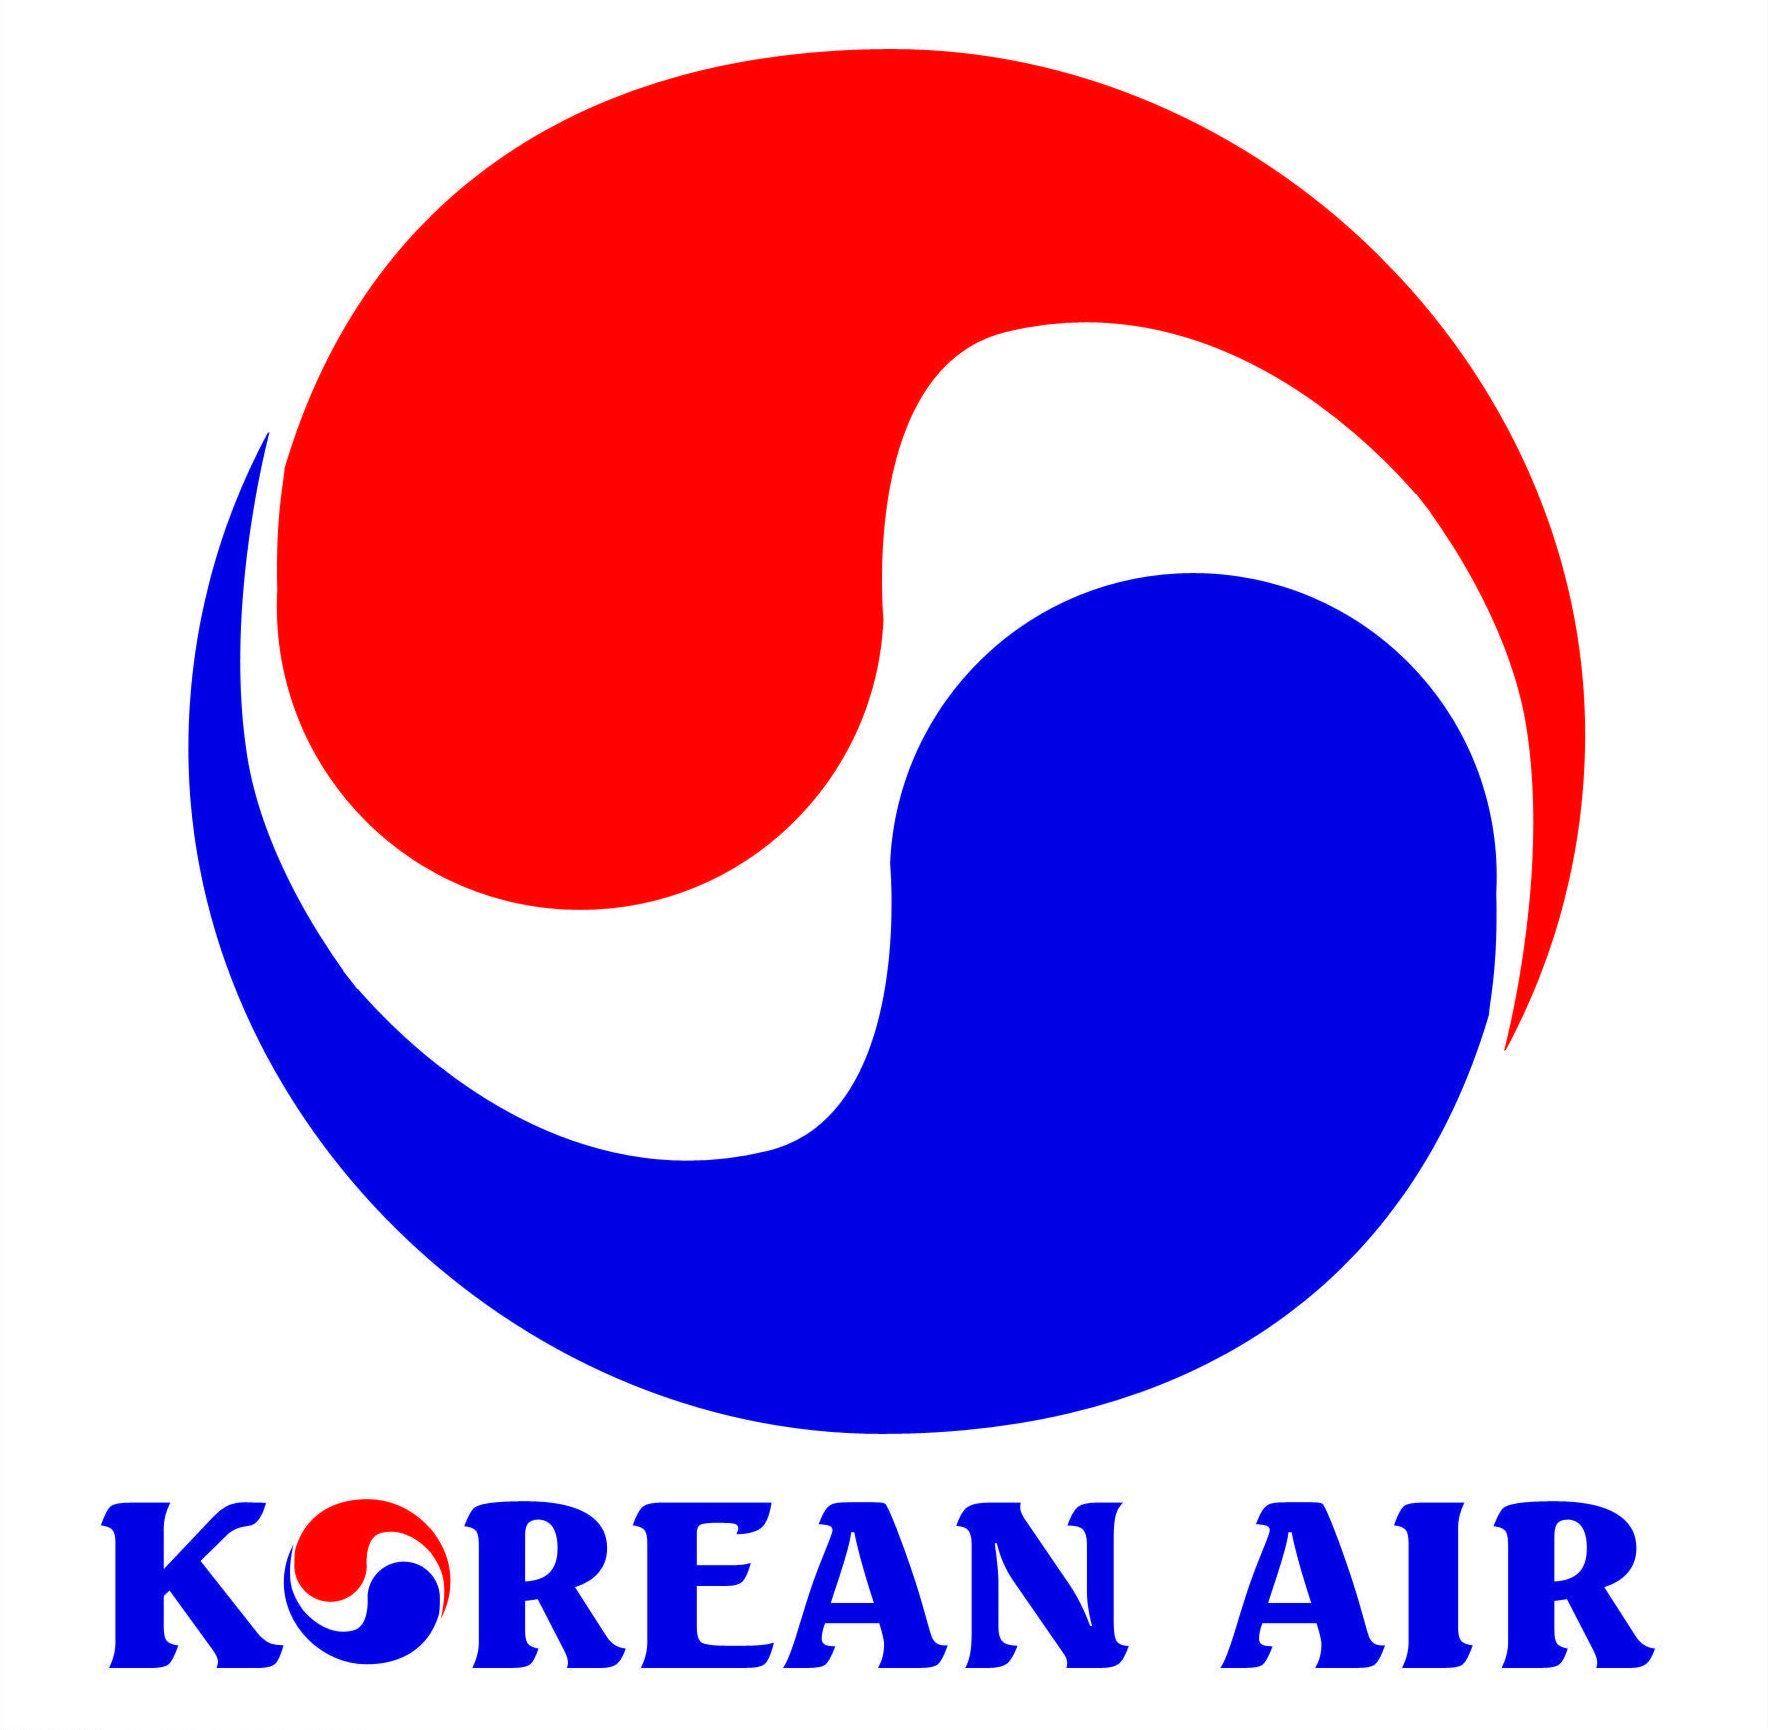 Korea Logo - Korean Air (South Korean airline) | ctc presentation | Aviation logo ...